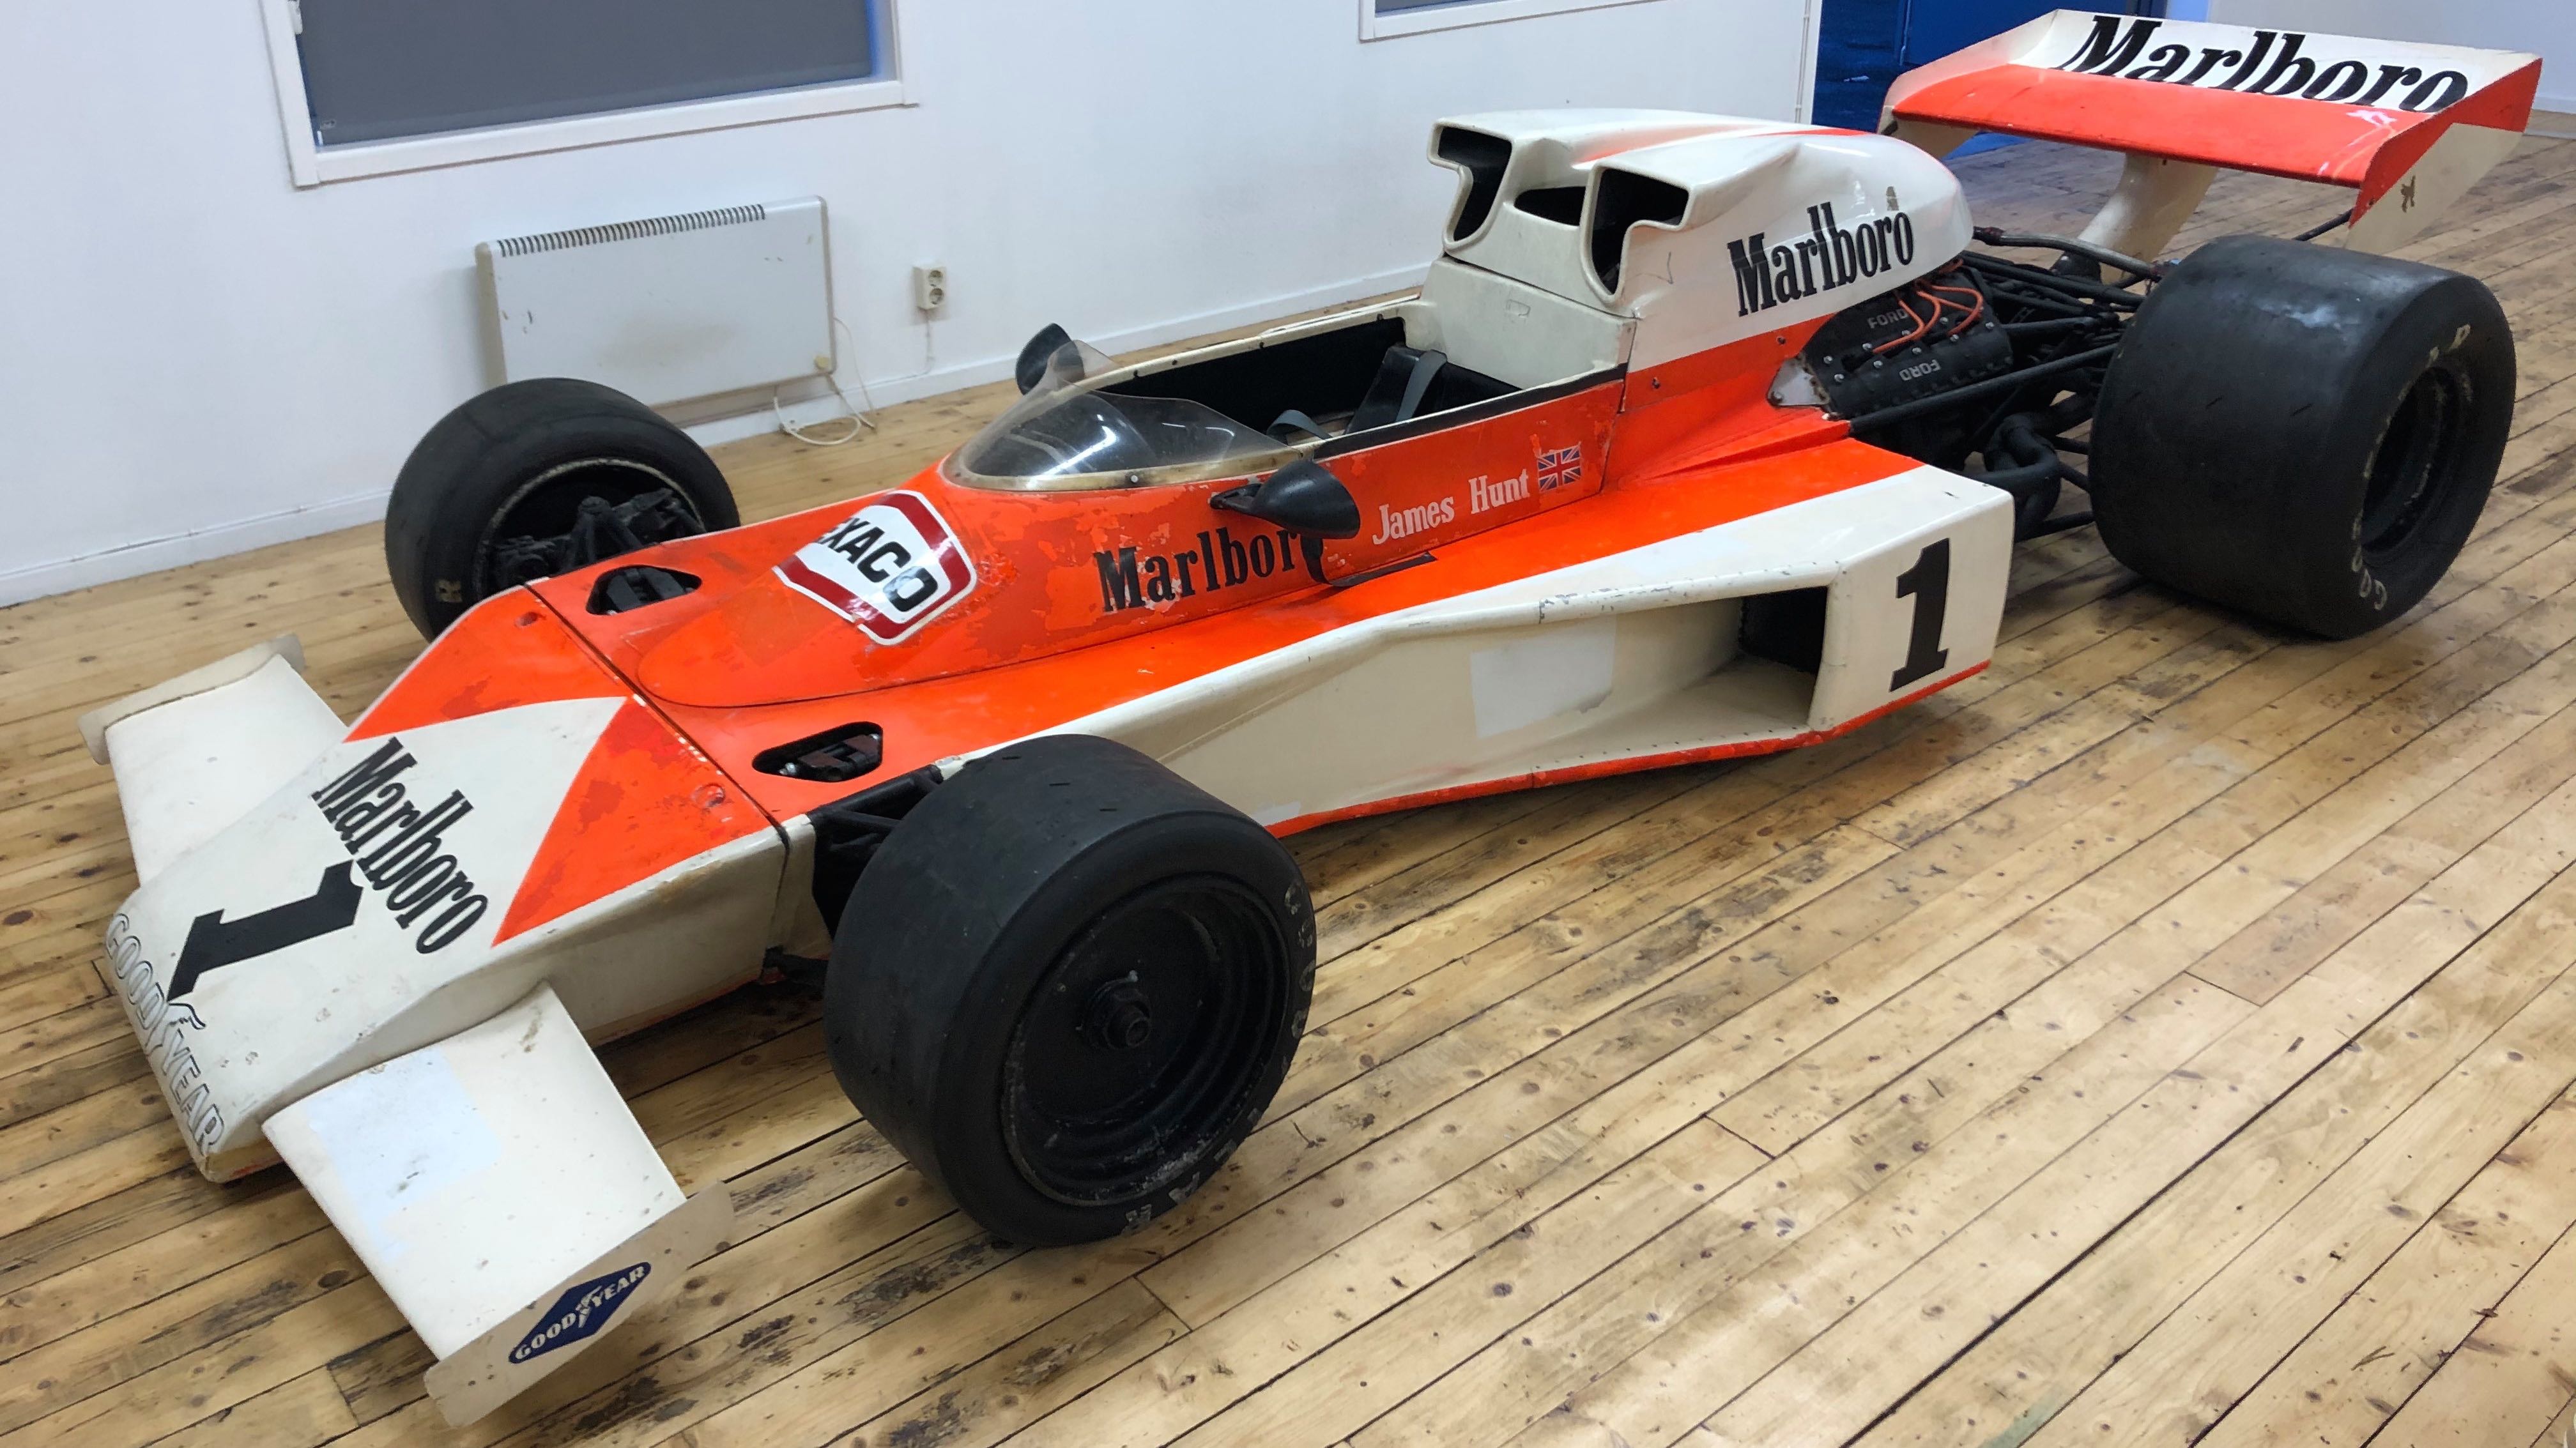 McLaren M23 show car